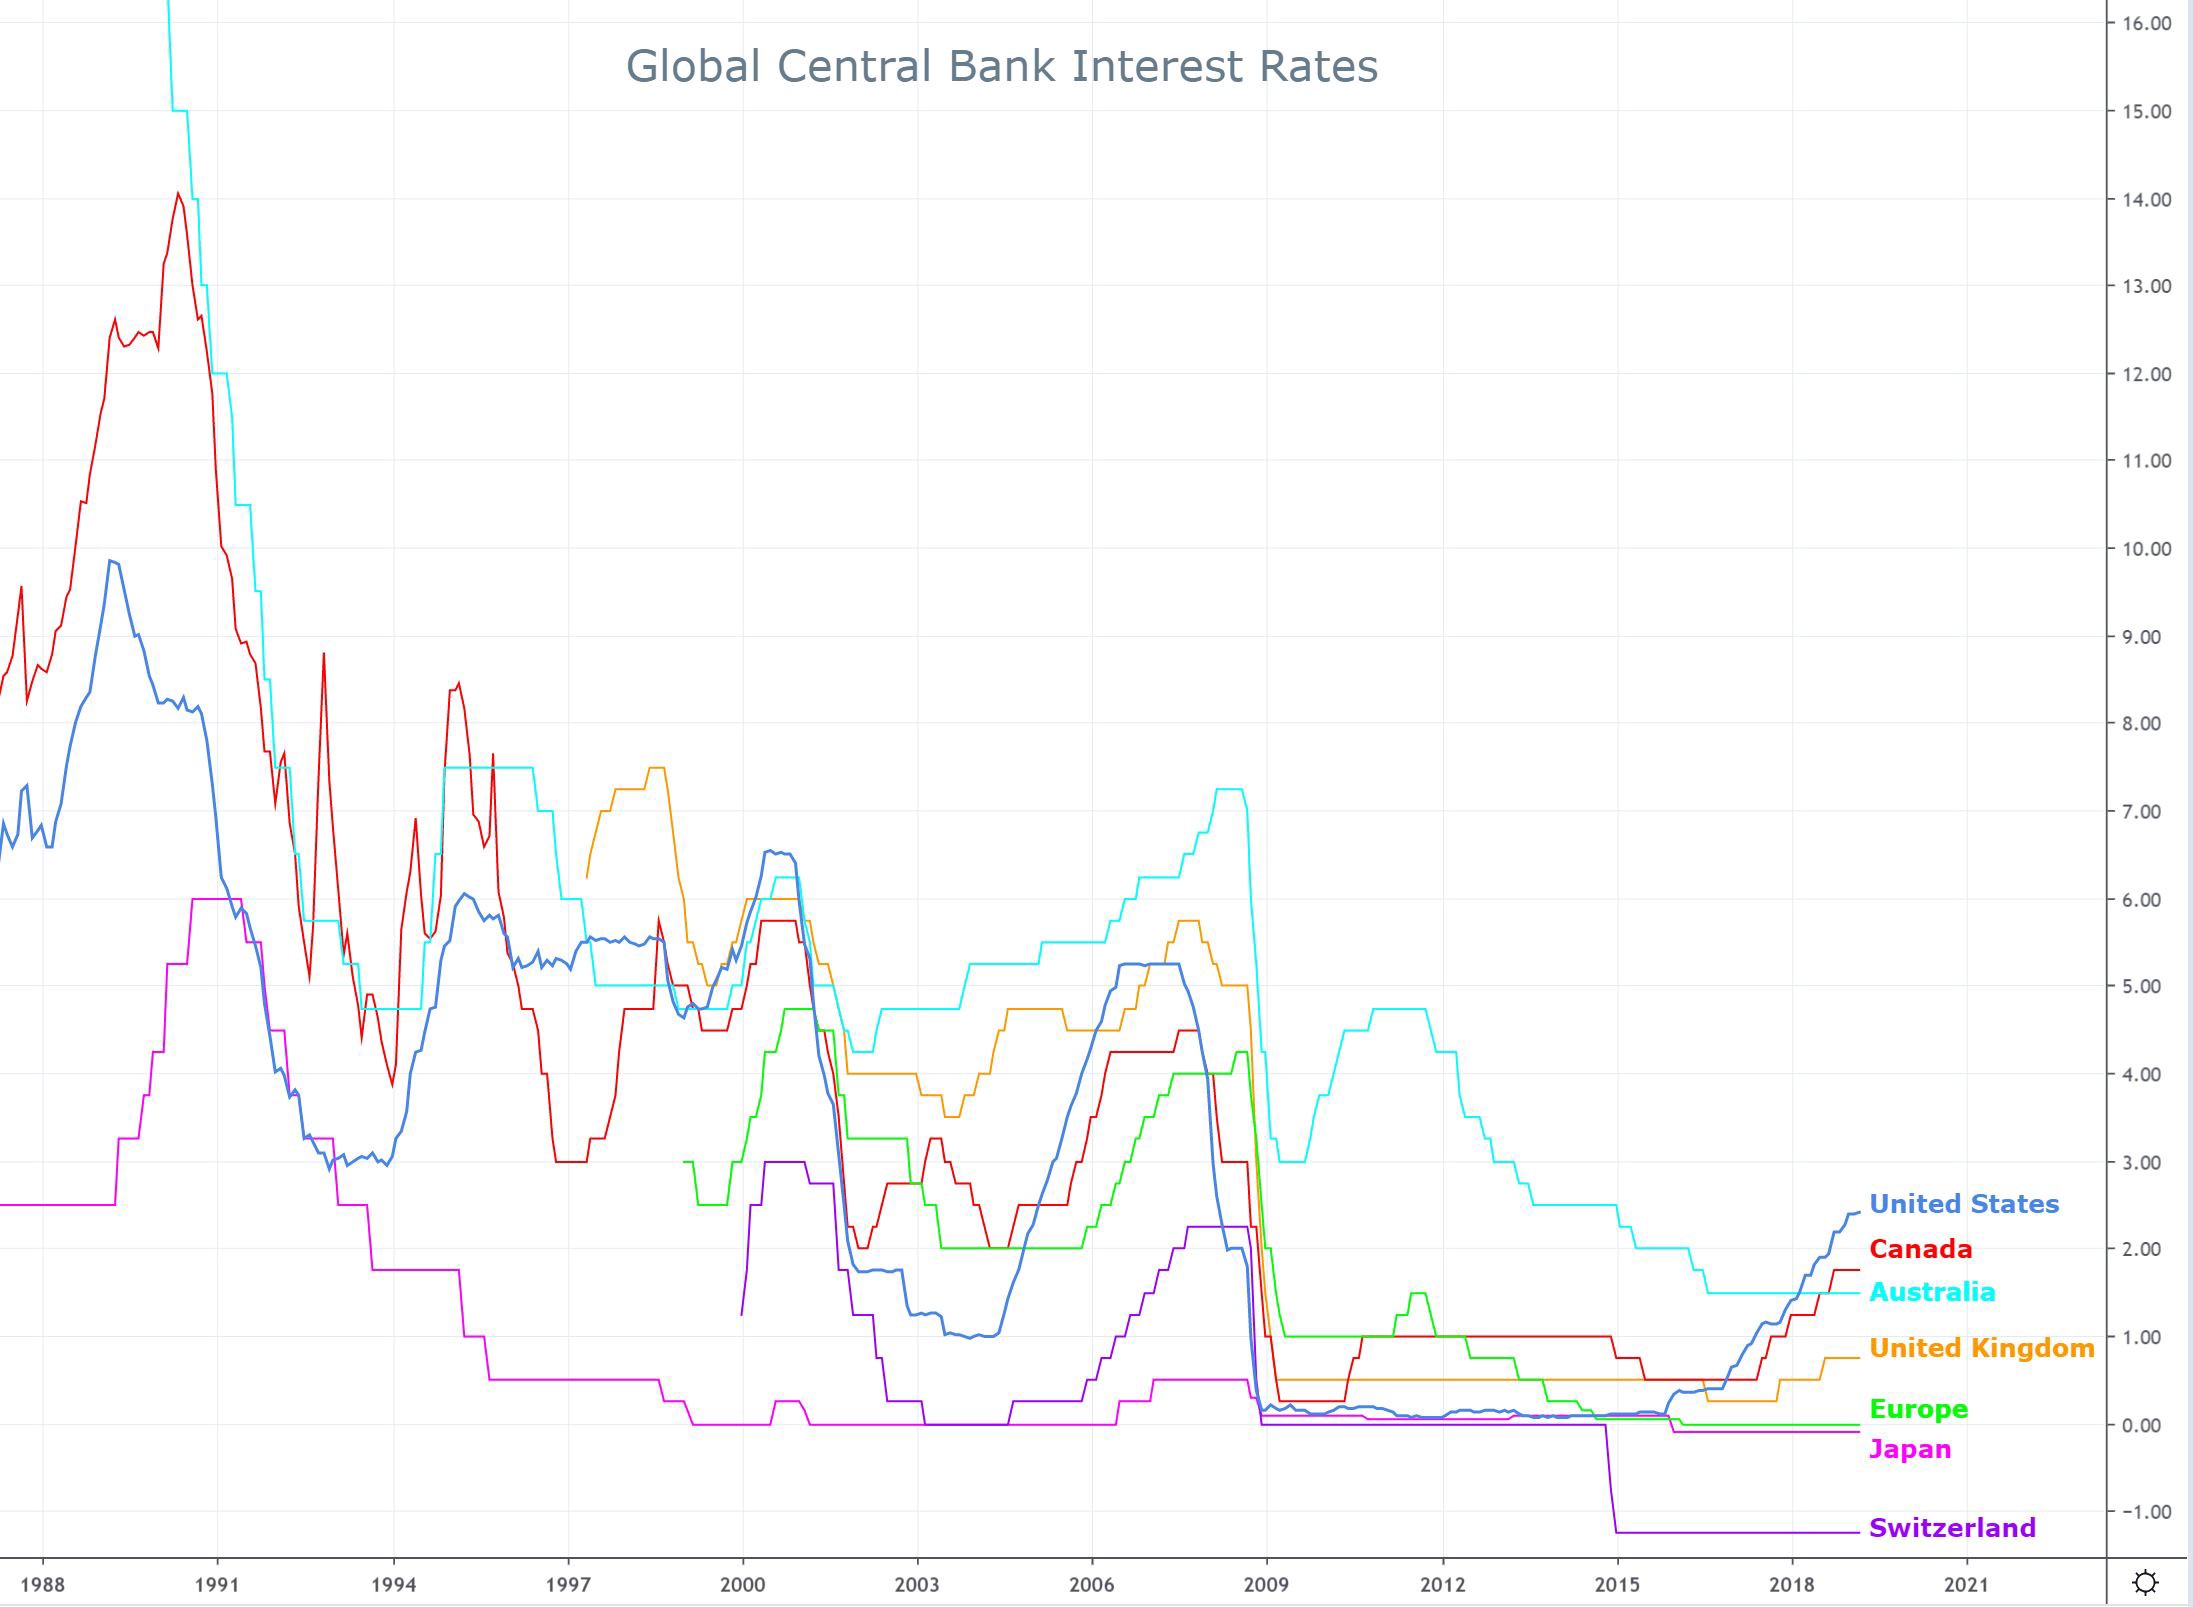 Global Central Banks Interest Rates (source: @burningw0rds on medium.com)